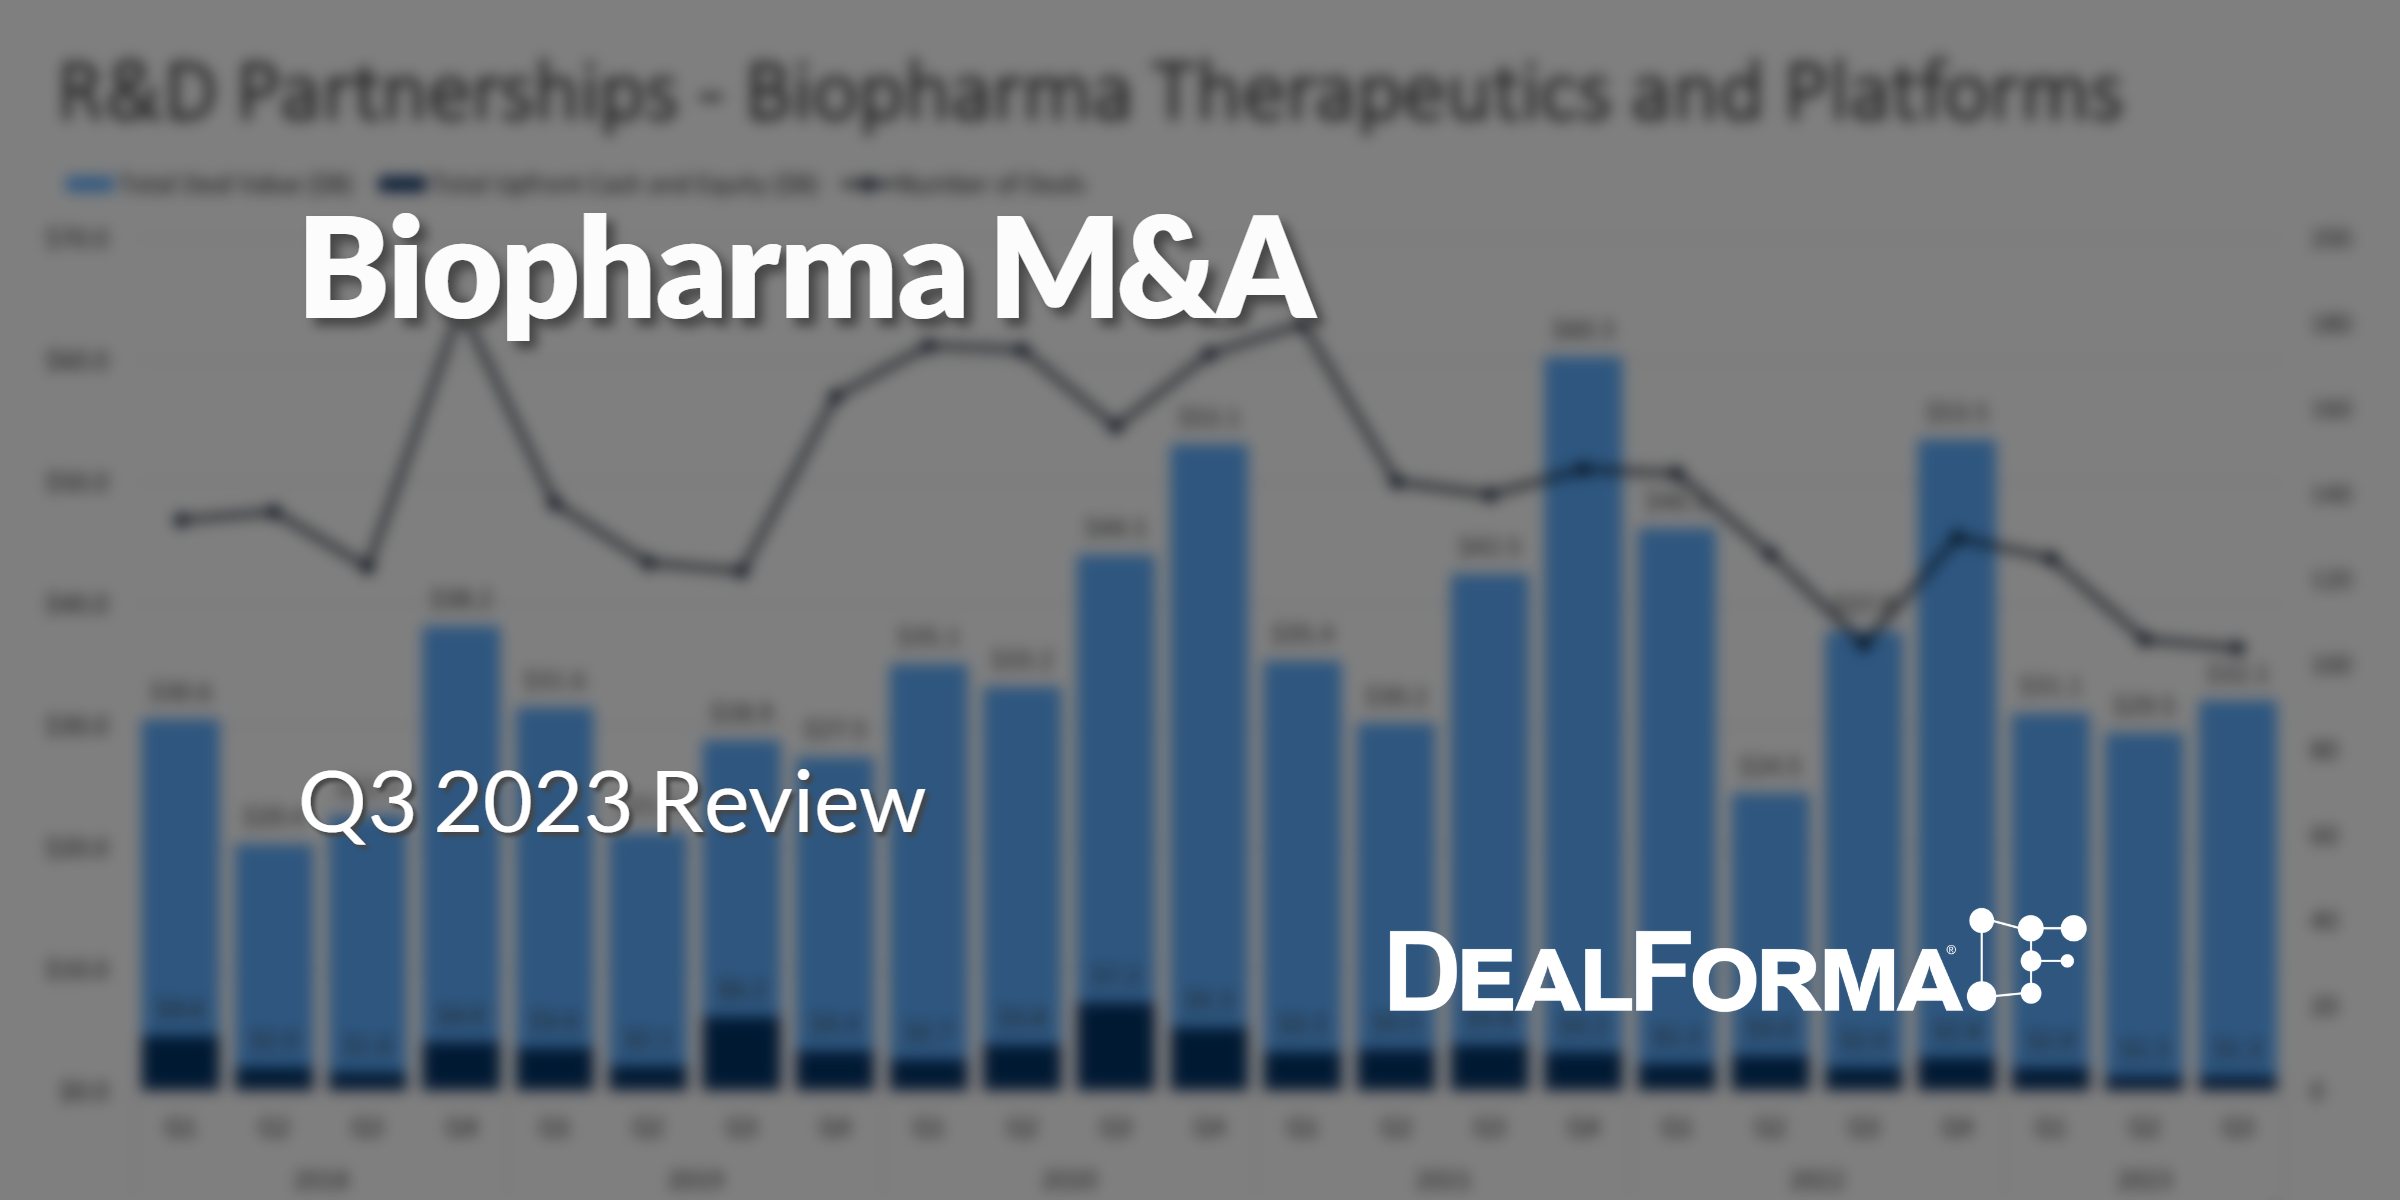 Biopharma M&A through Q3 2023 - DealForma